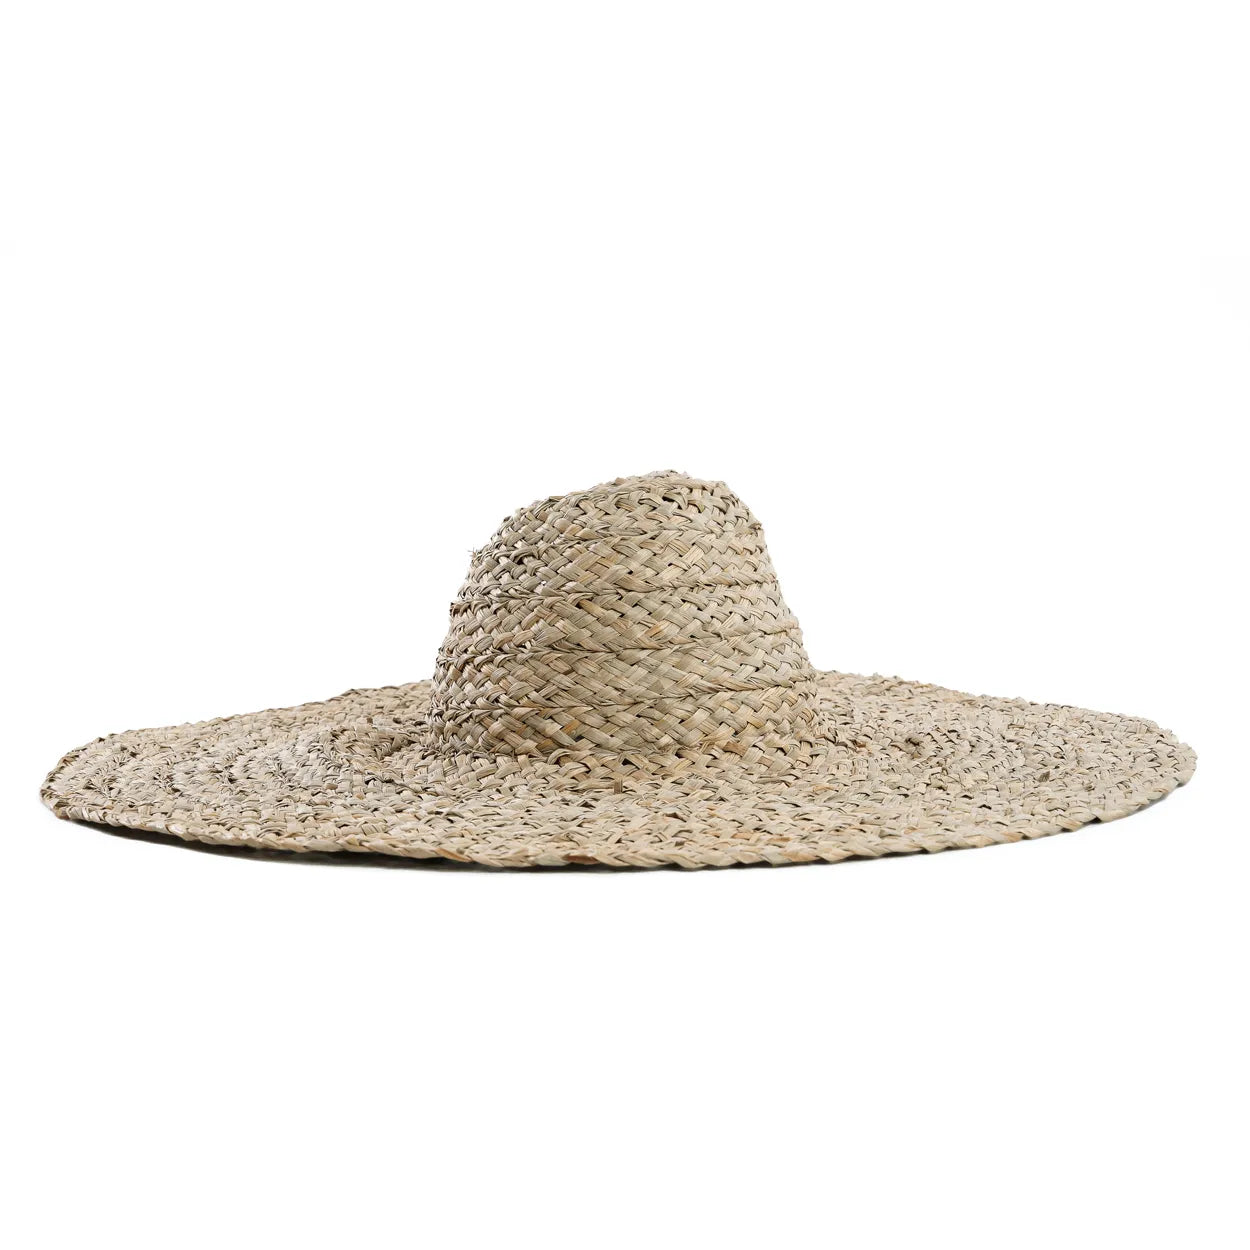 Cabo de Gata Breeze Hat - Summer Outdoor Hat